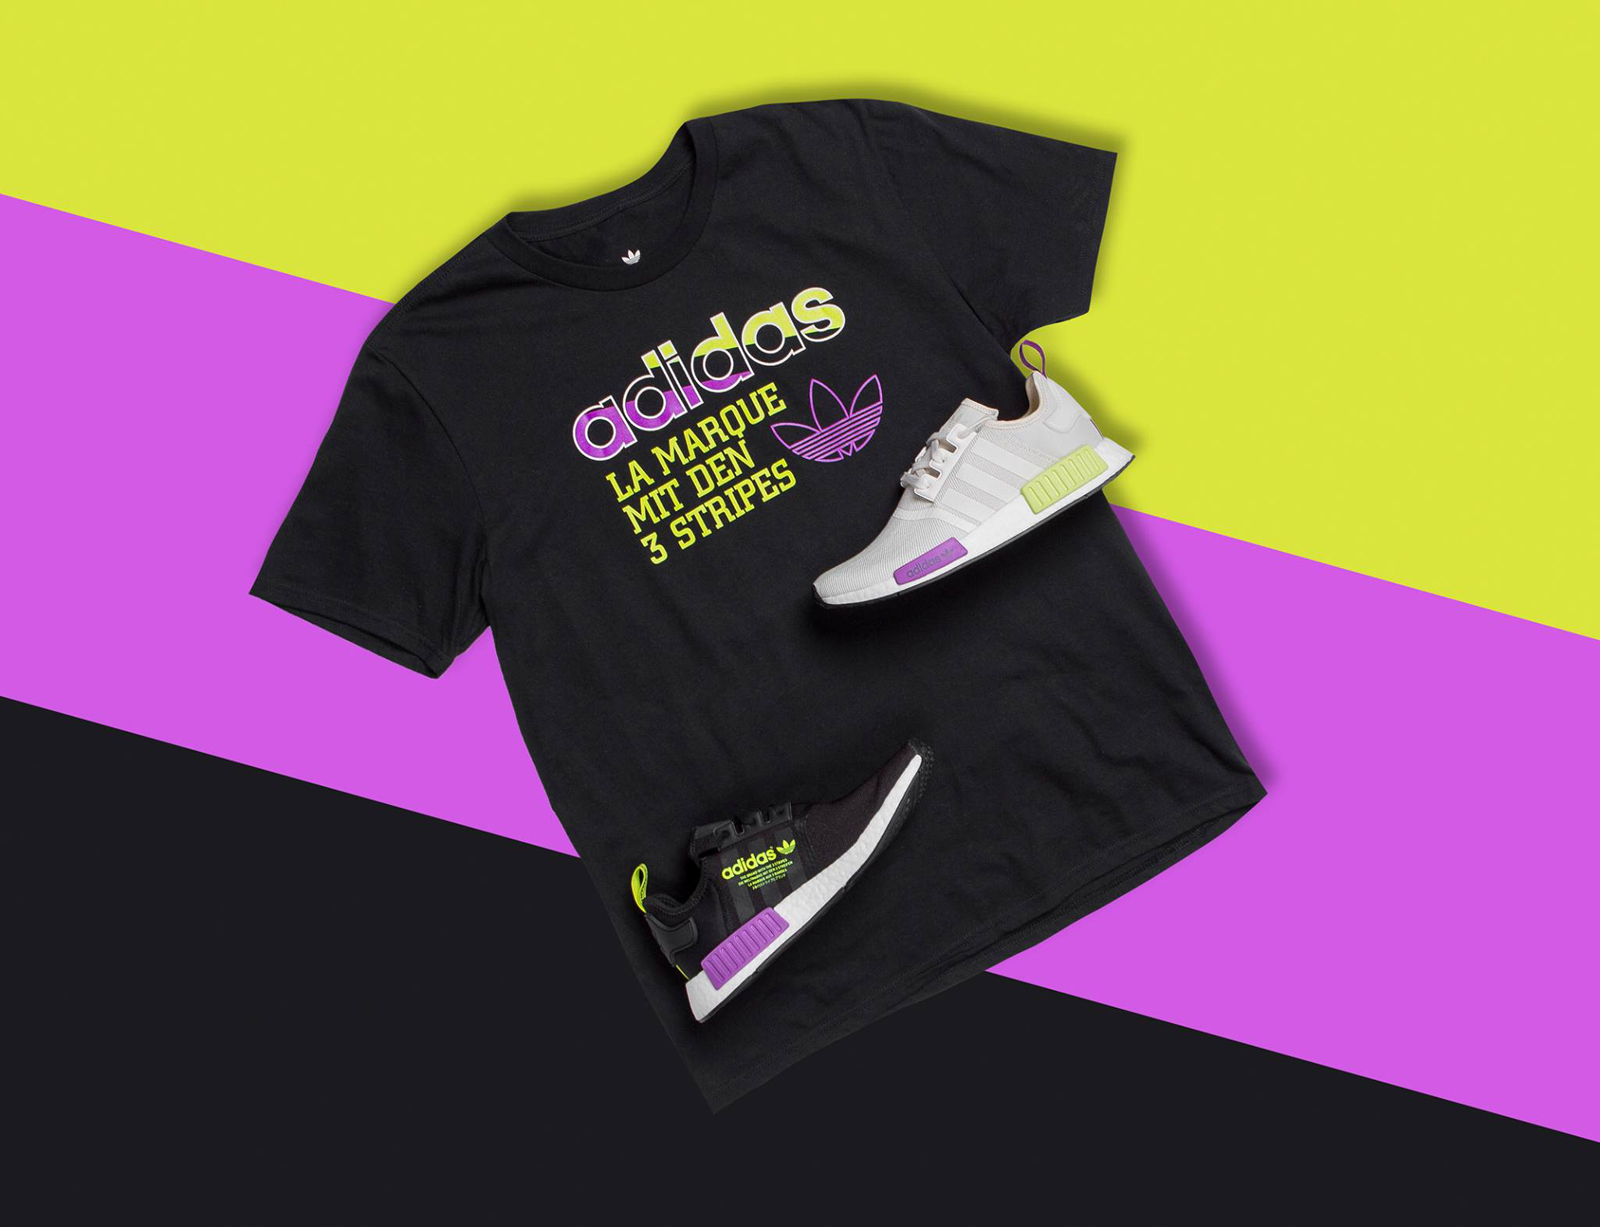 adidas-nmd-joker-shoes-and-shirt